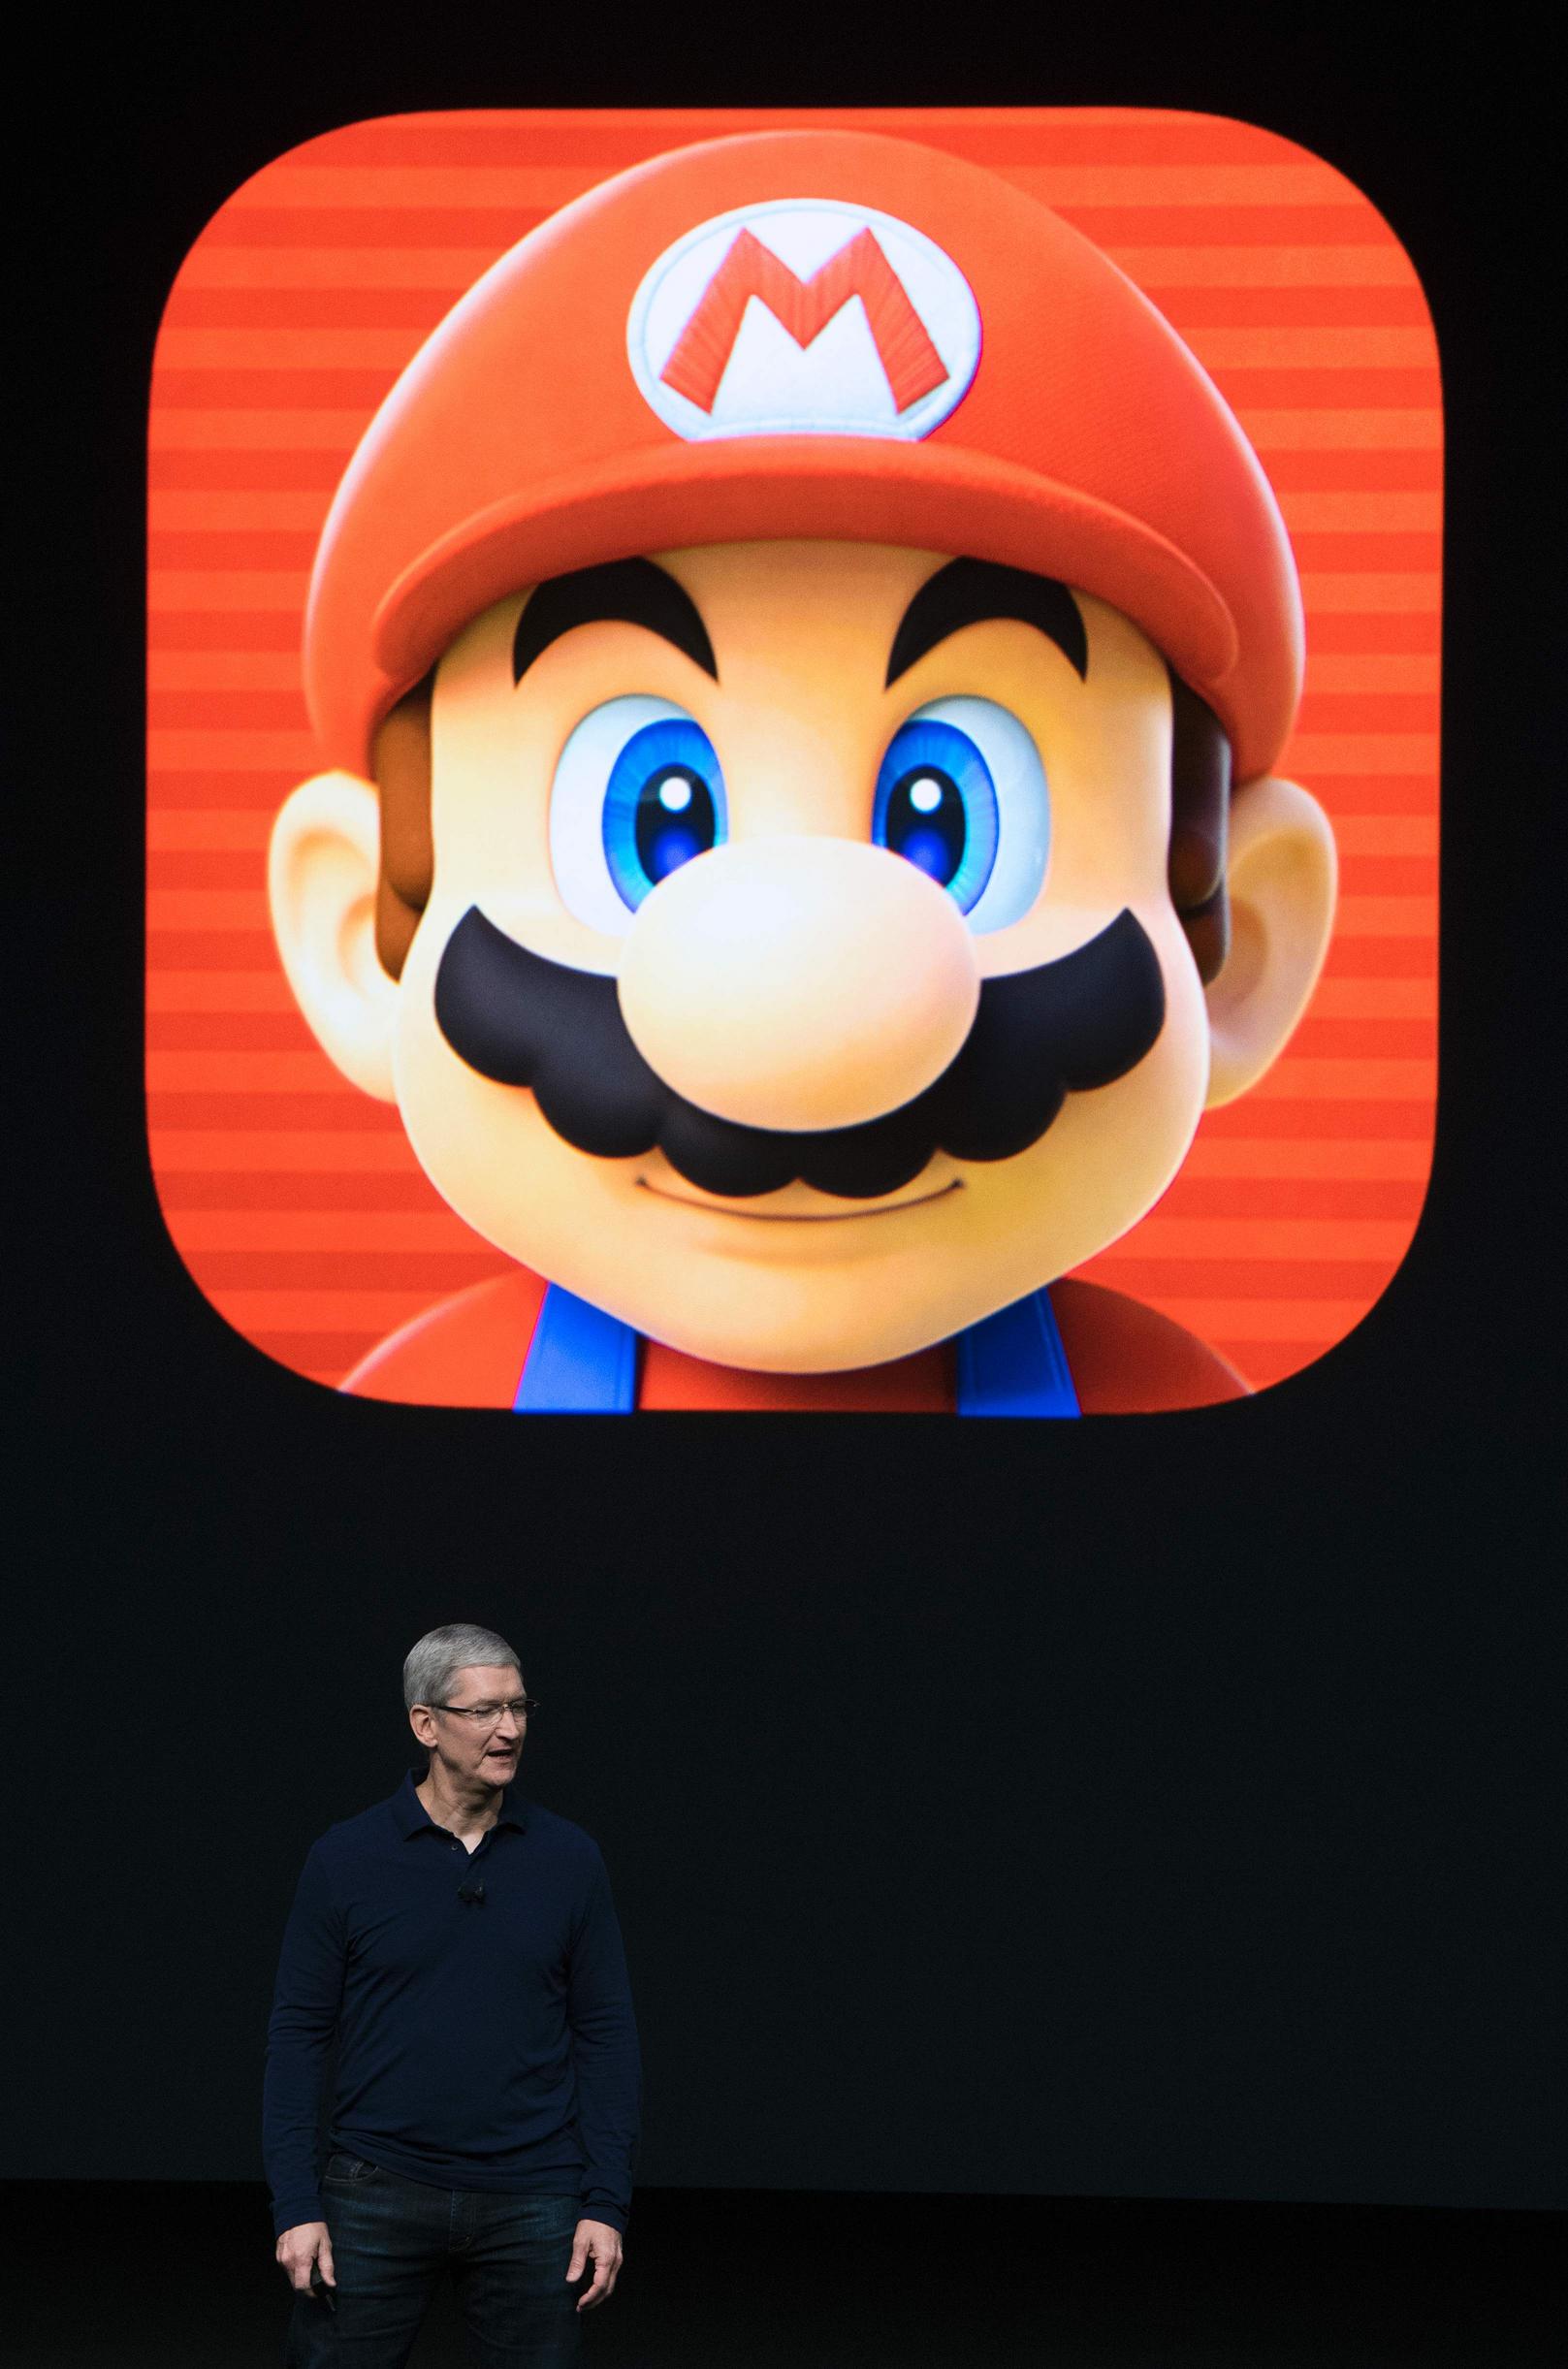 Super Mario jumps onto Apple&iPhone in December, Nintendo& 